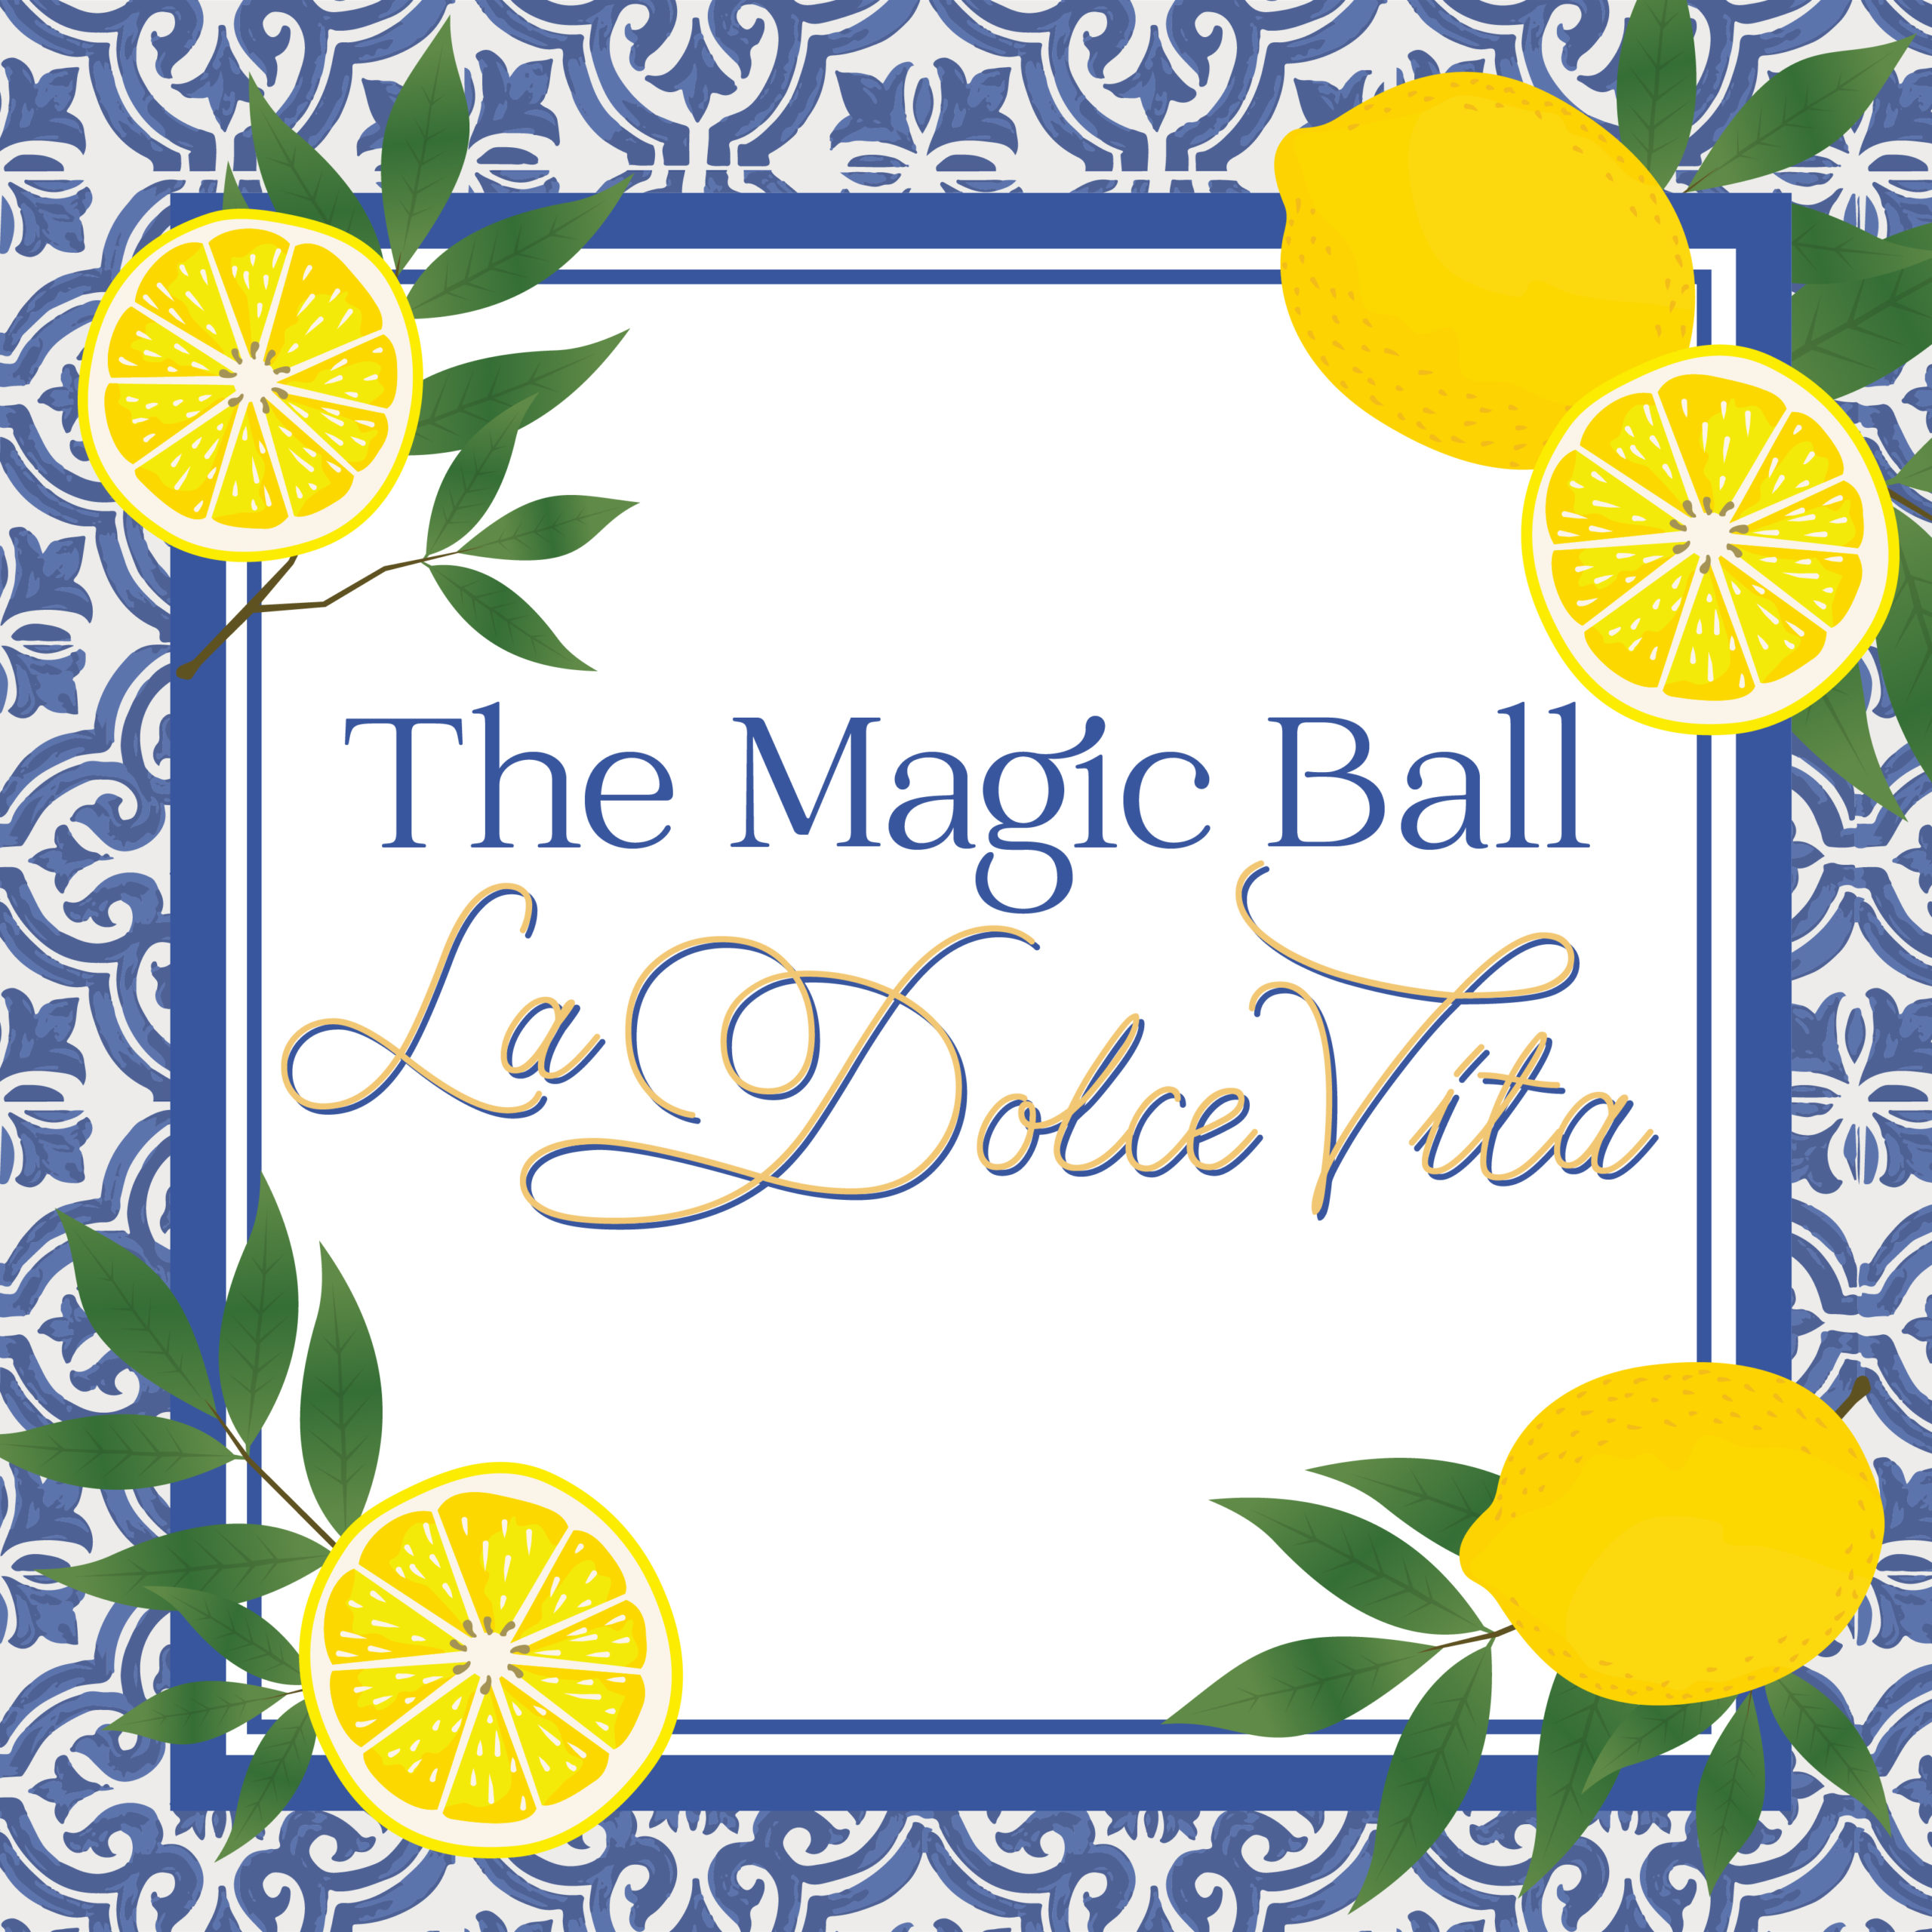 The Magic Ball Annual Fundraising Gala